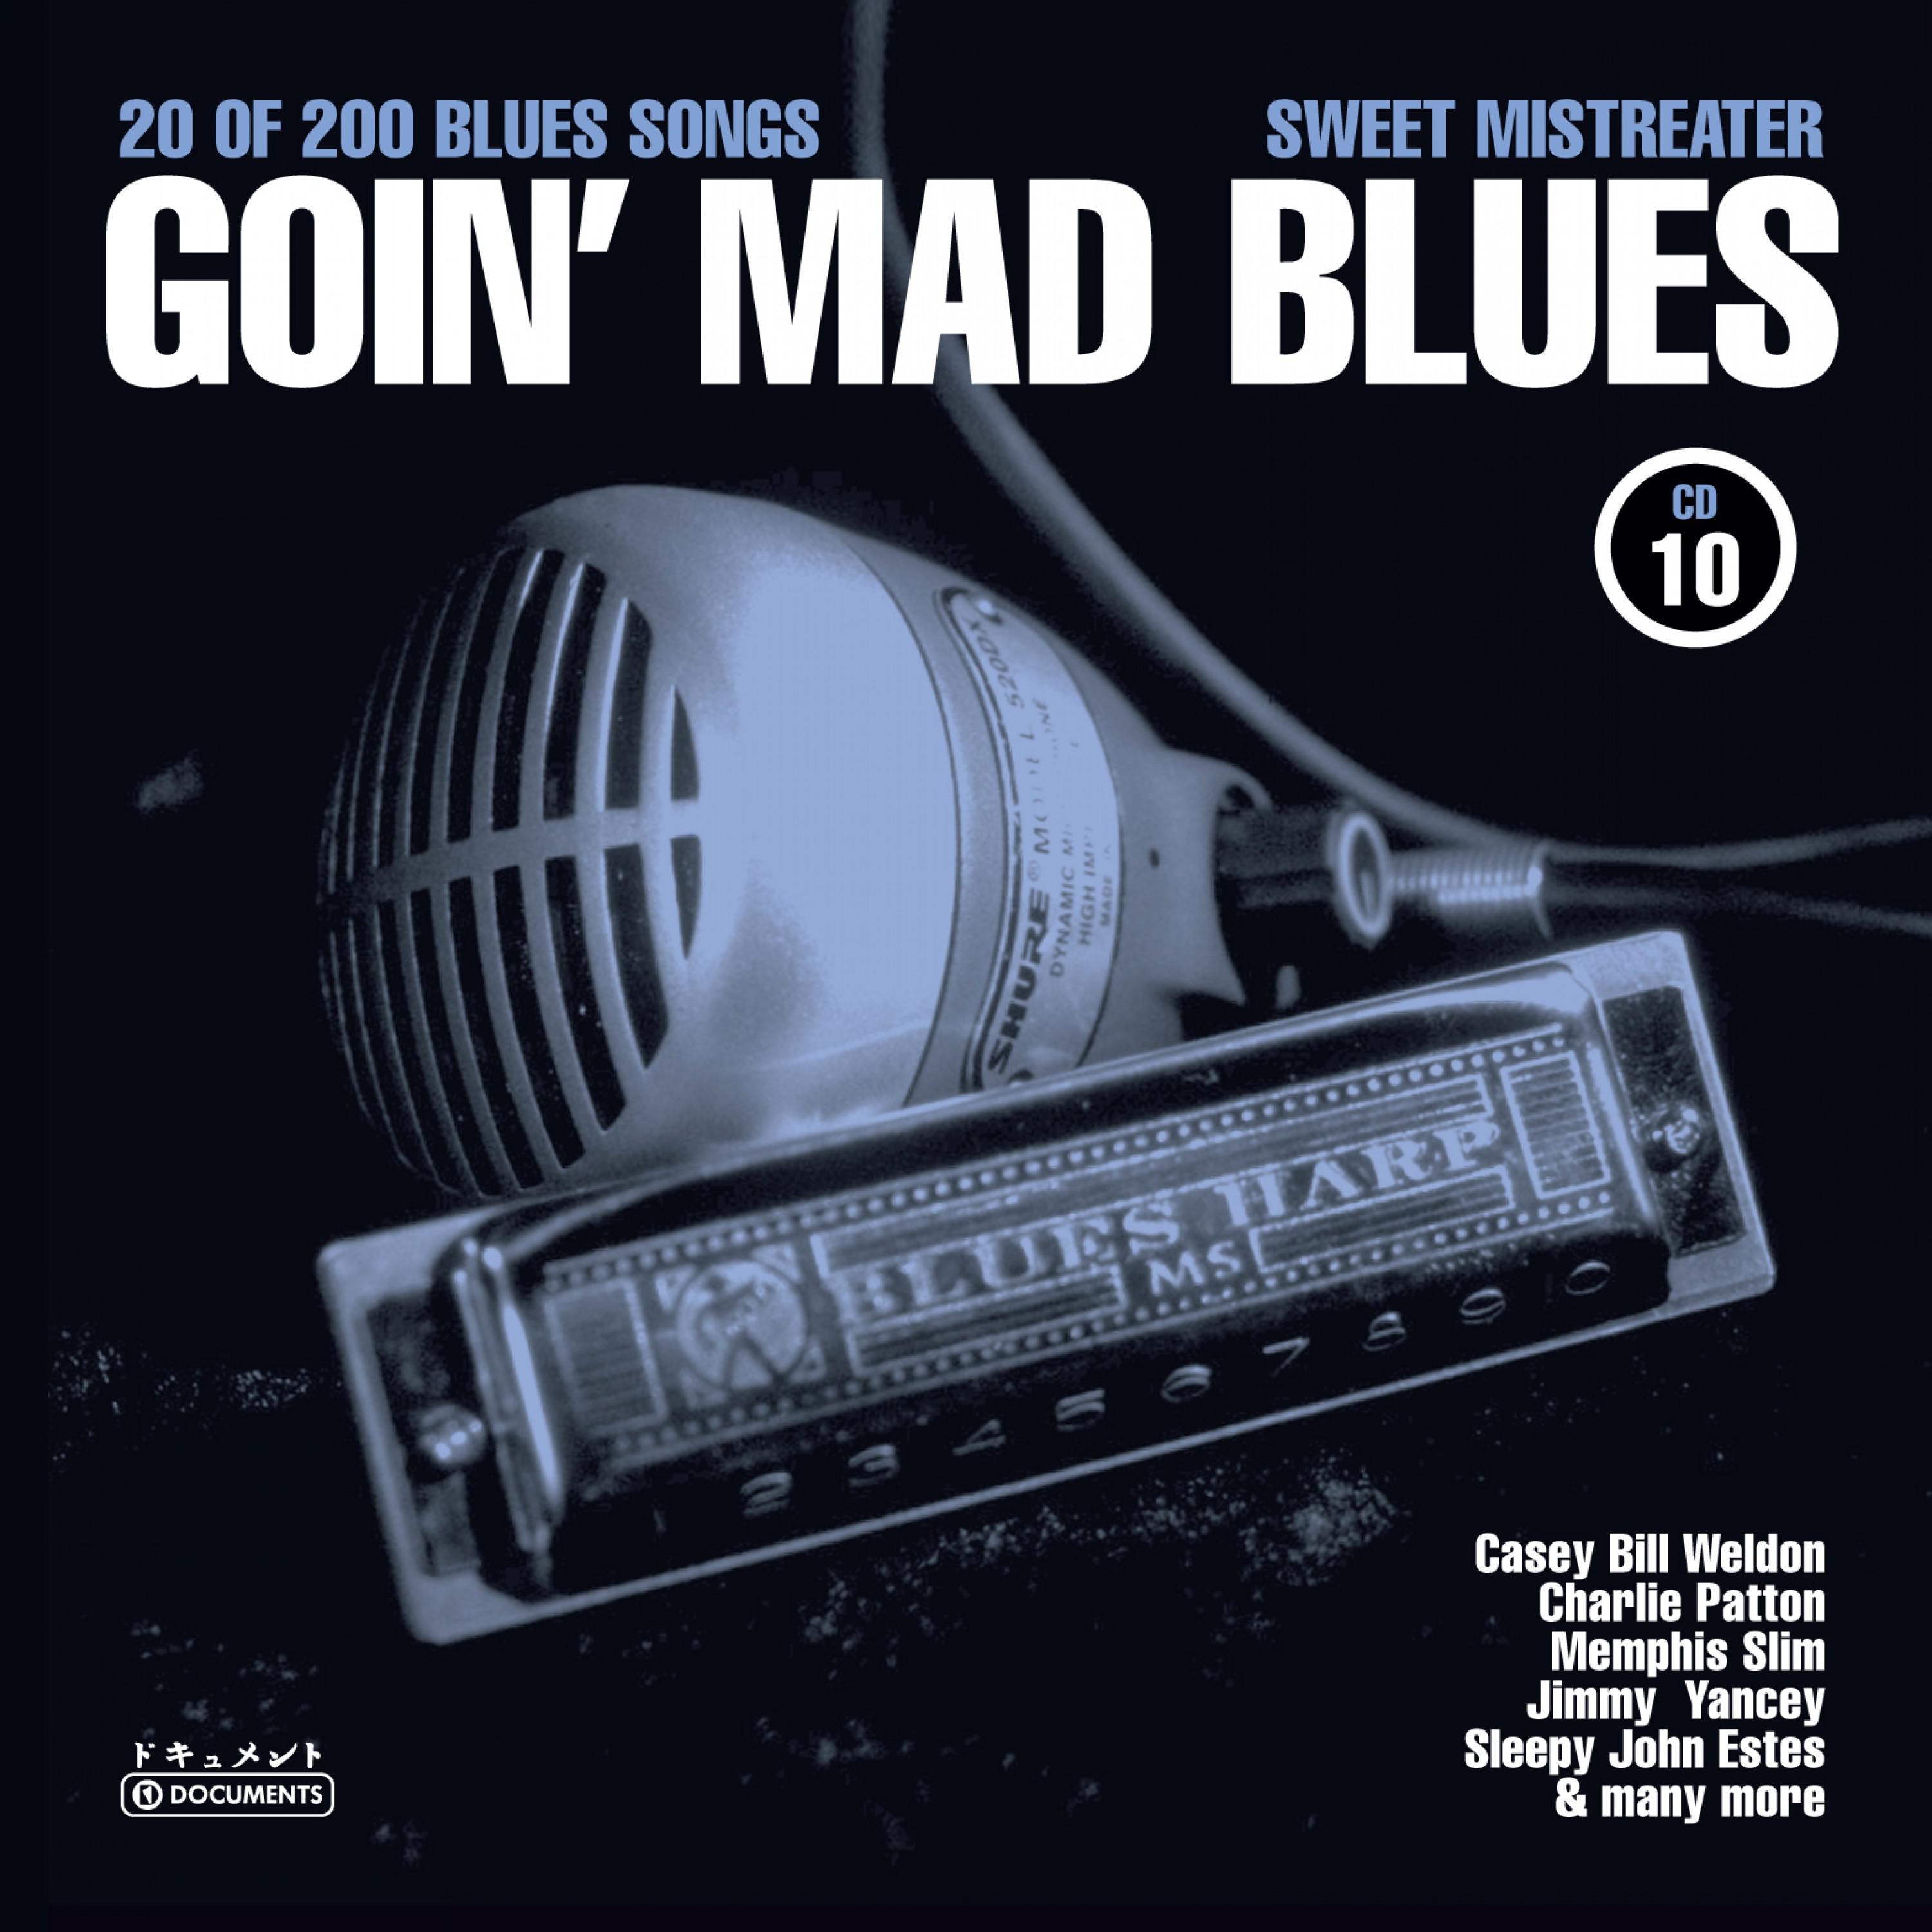 Goin' Mad Blues Vol. 10